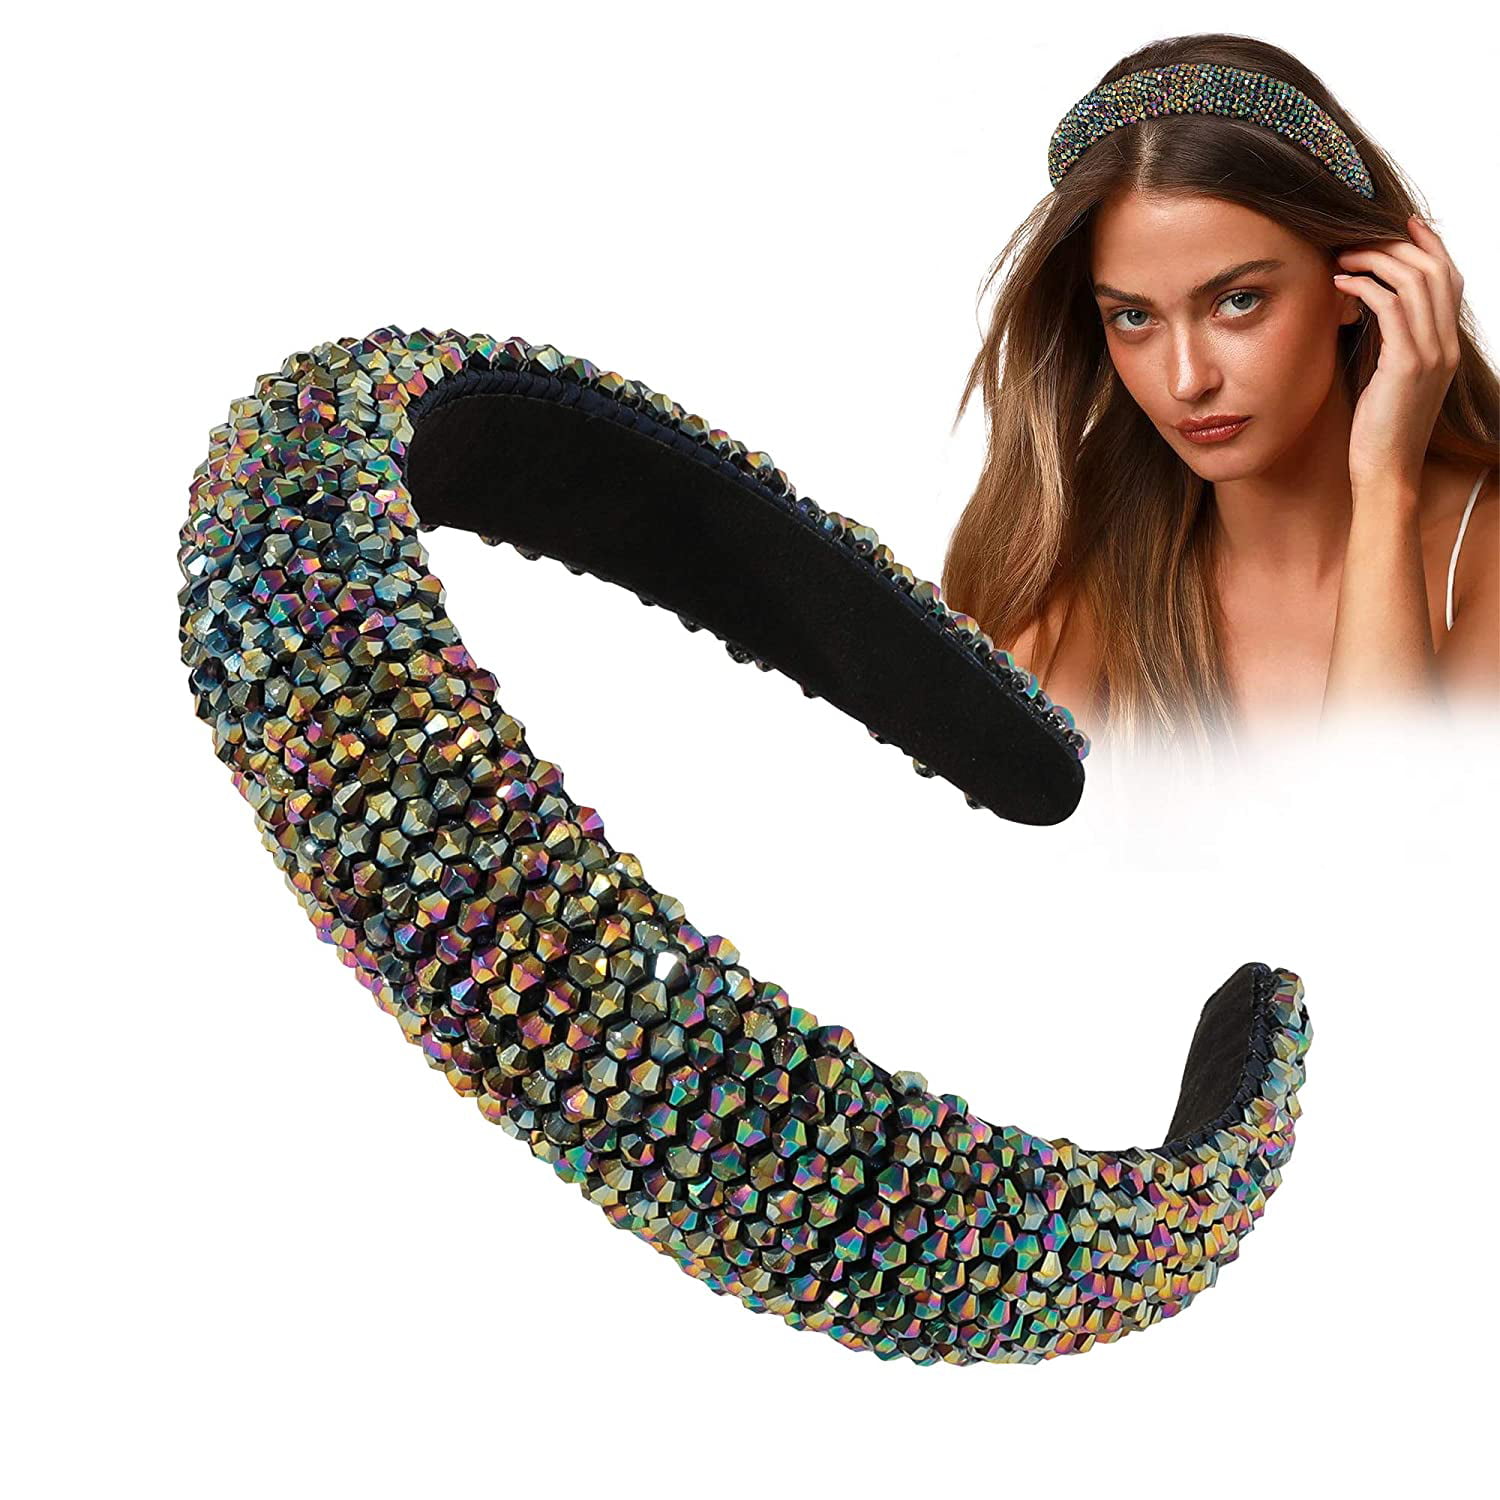 2pcs Women Girls Plastic Glitter Headband Reversible Hair Band Hoop Party Gifts